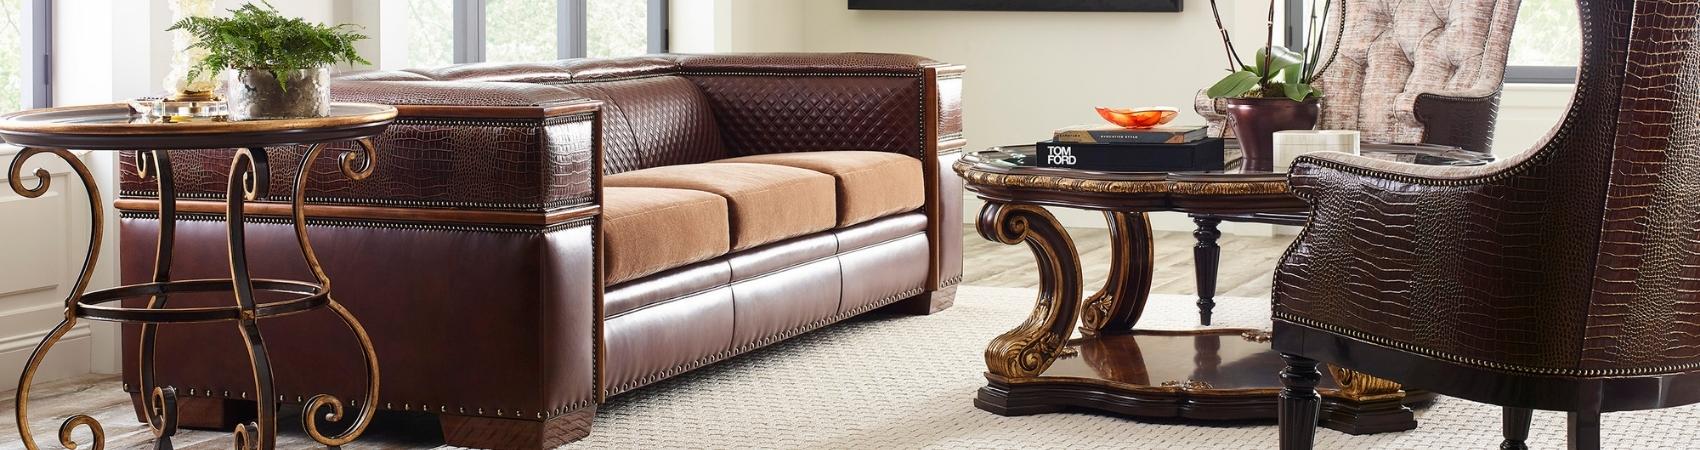 hancock & moore leather furniture